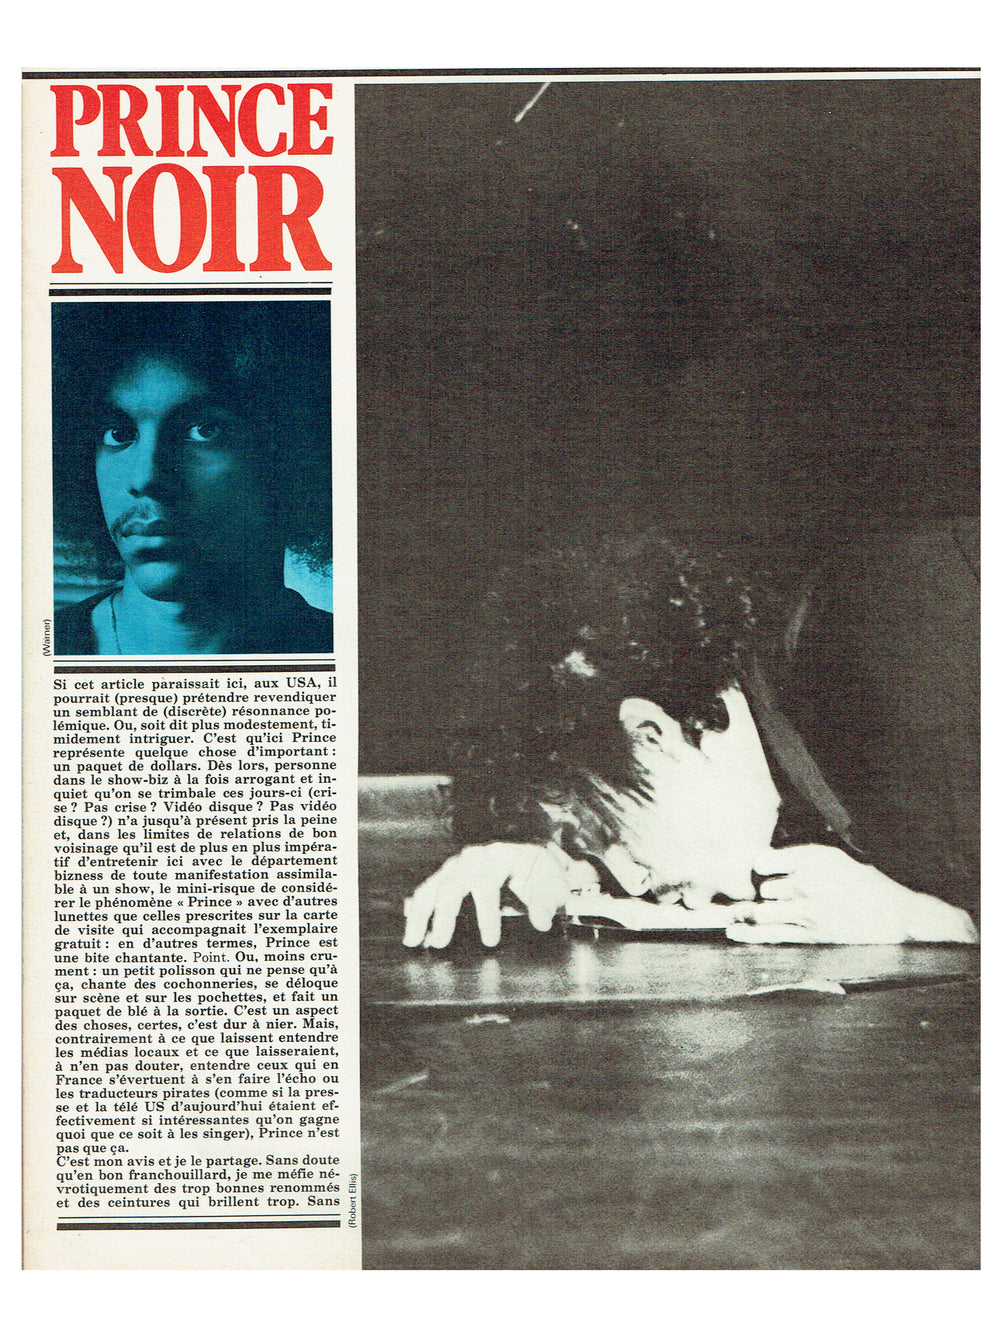 Prince Rock & Folk Magazine December 1983 6 Page Article